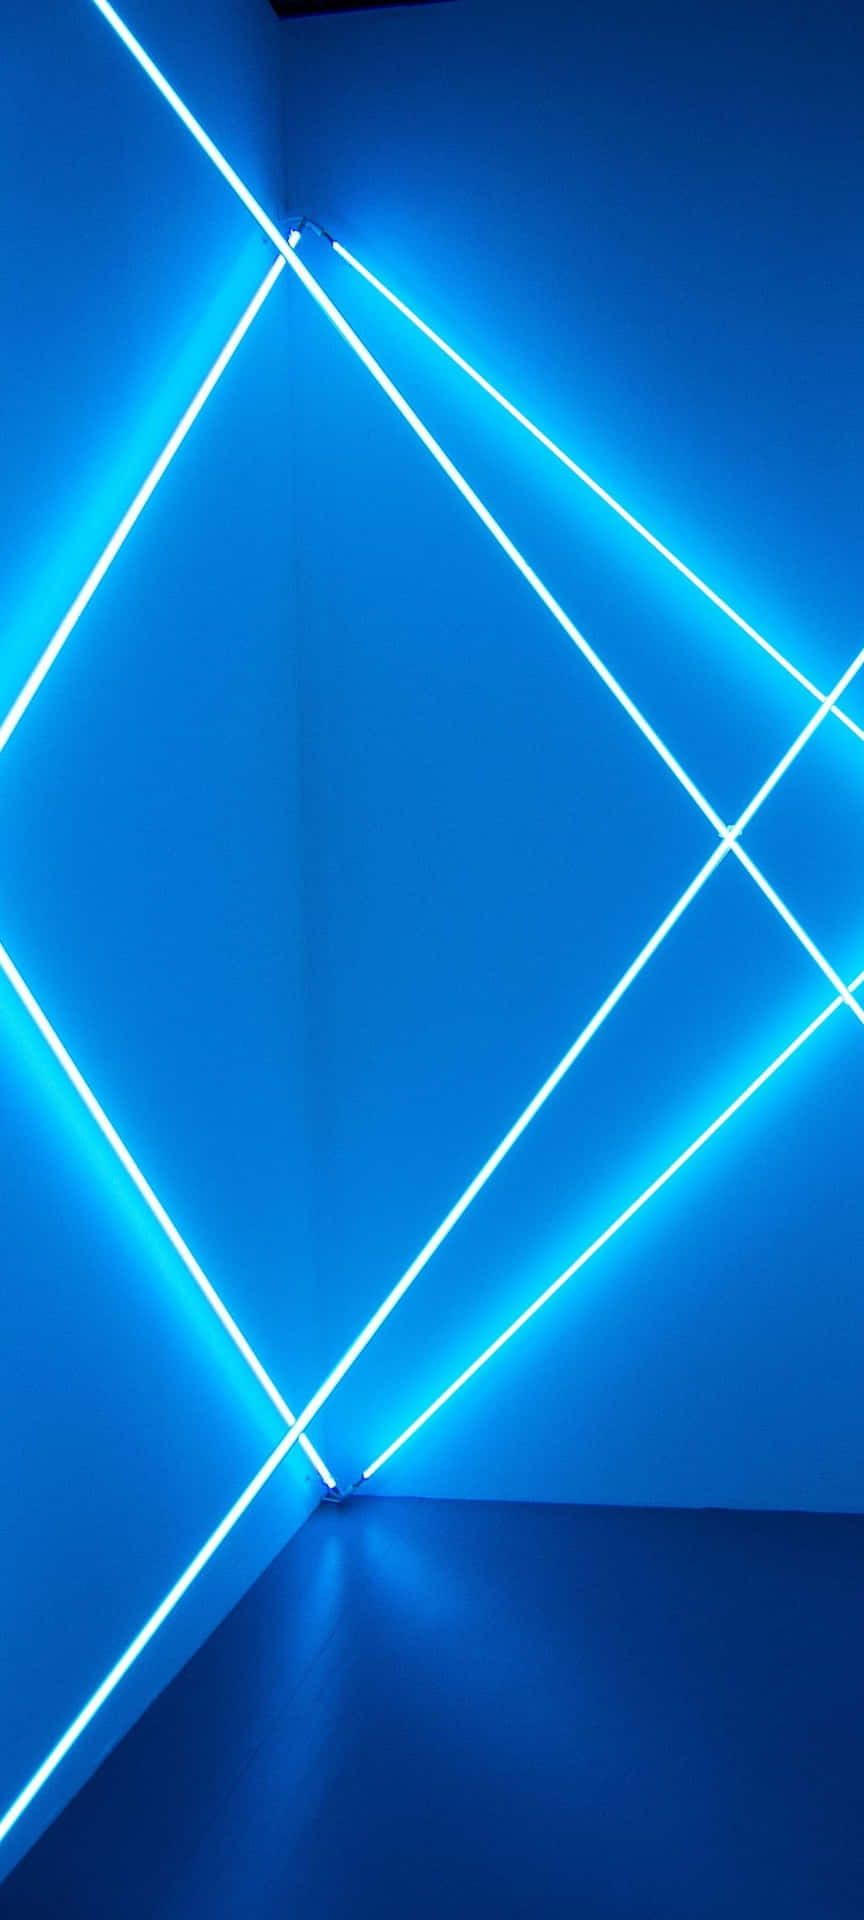 Vibrant Blue Neon Lights Light Up the Night Wallpaper